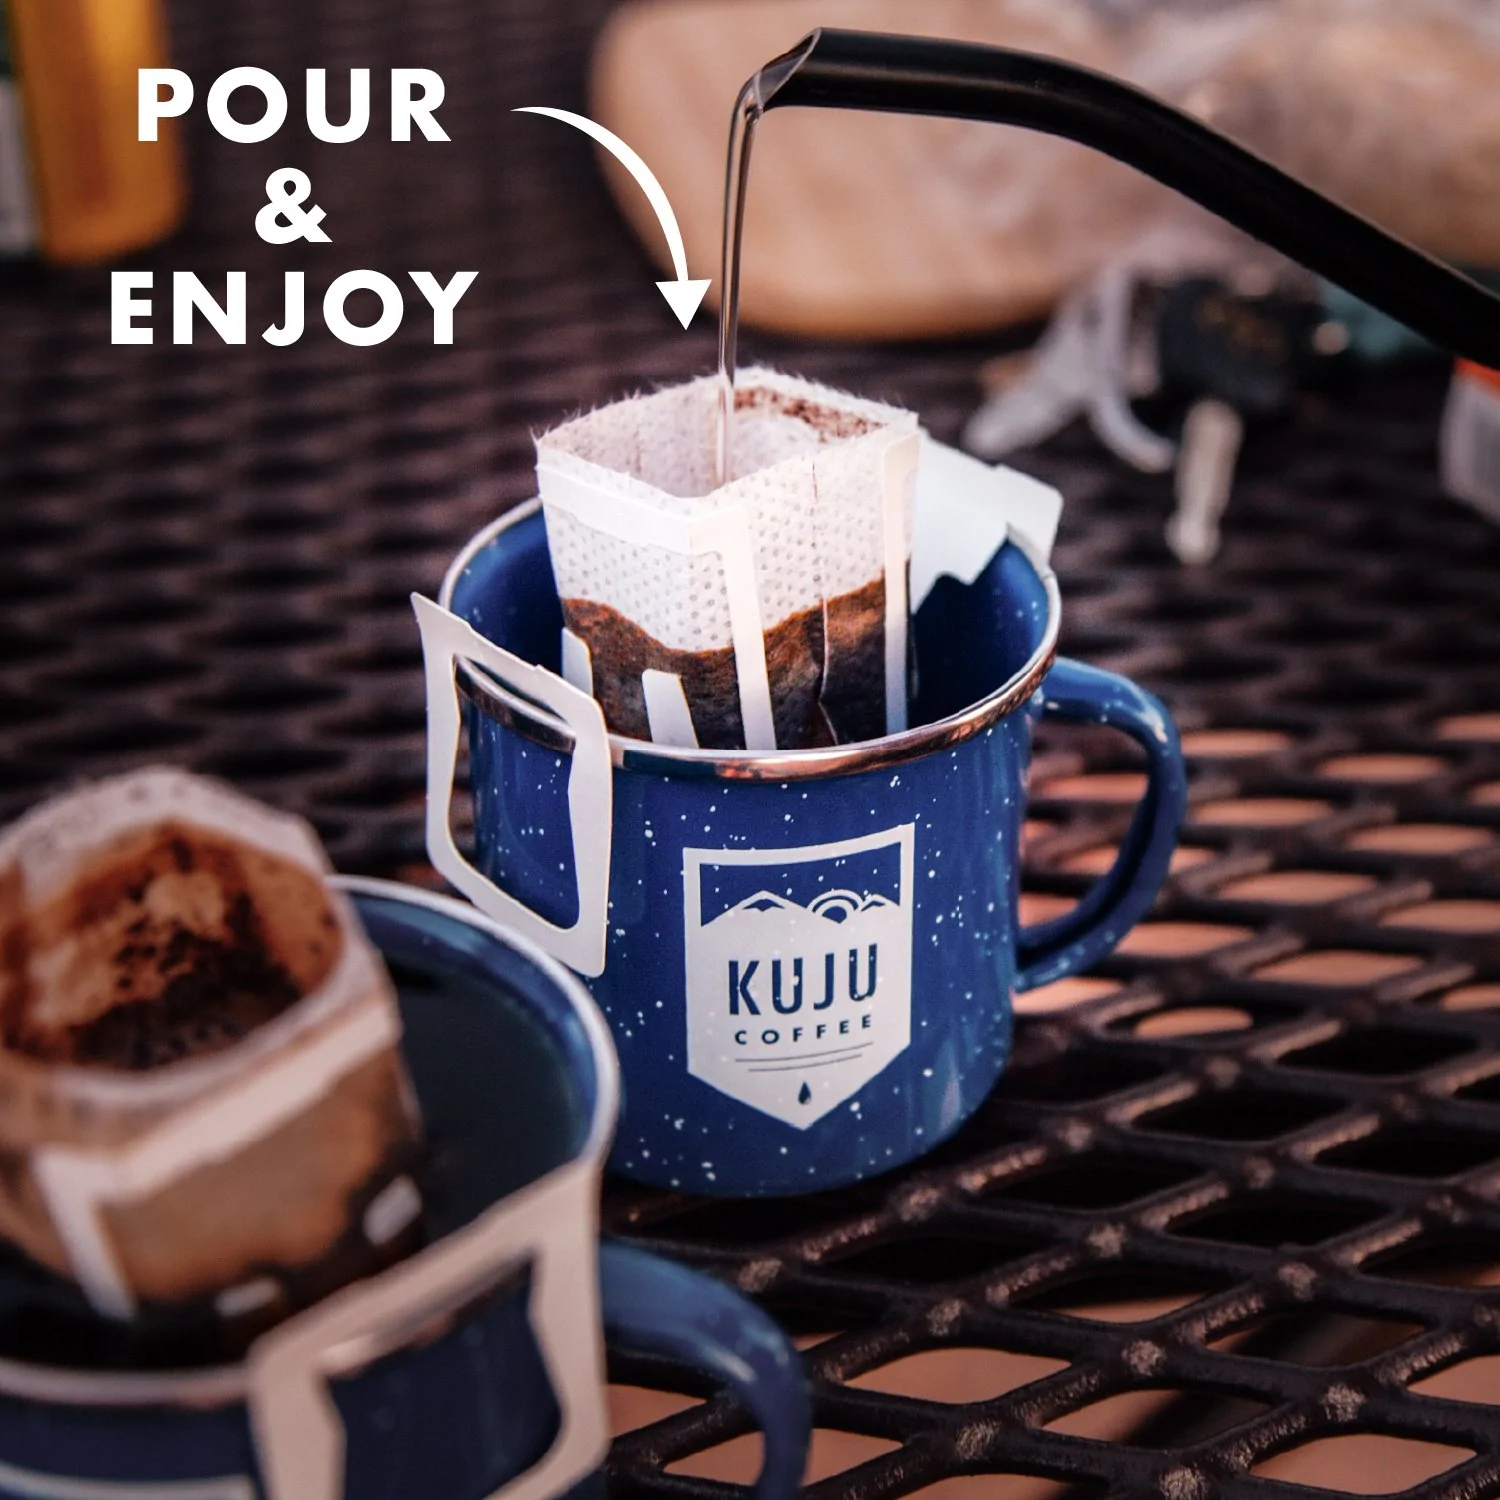 Kuju Coffee van life essentials